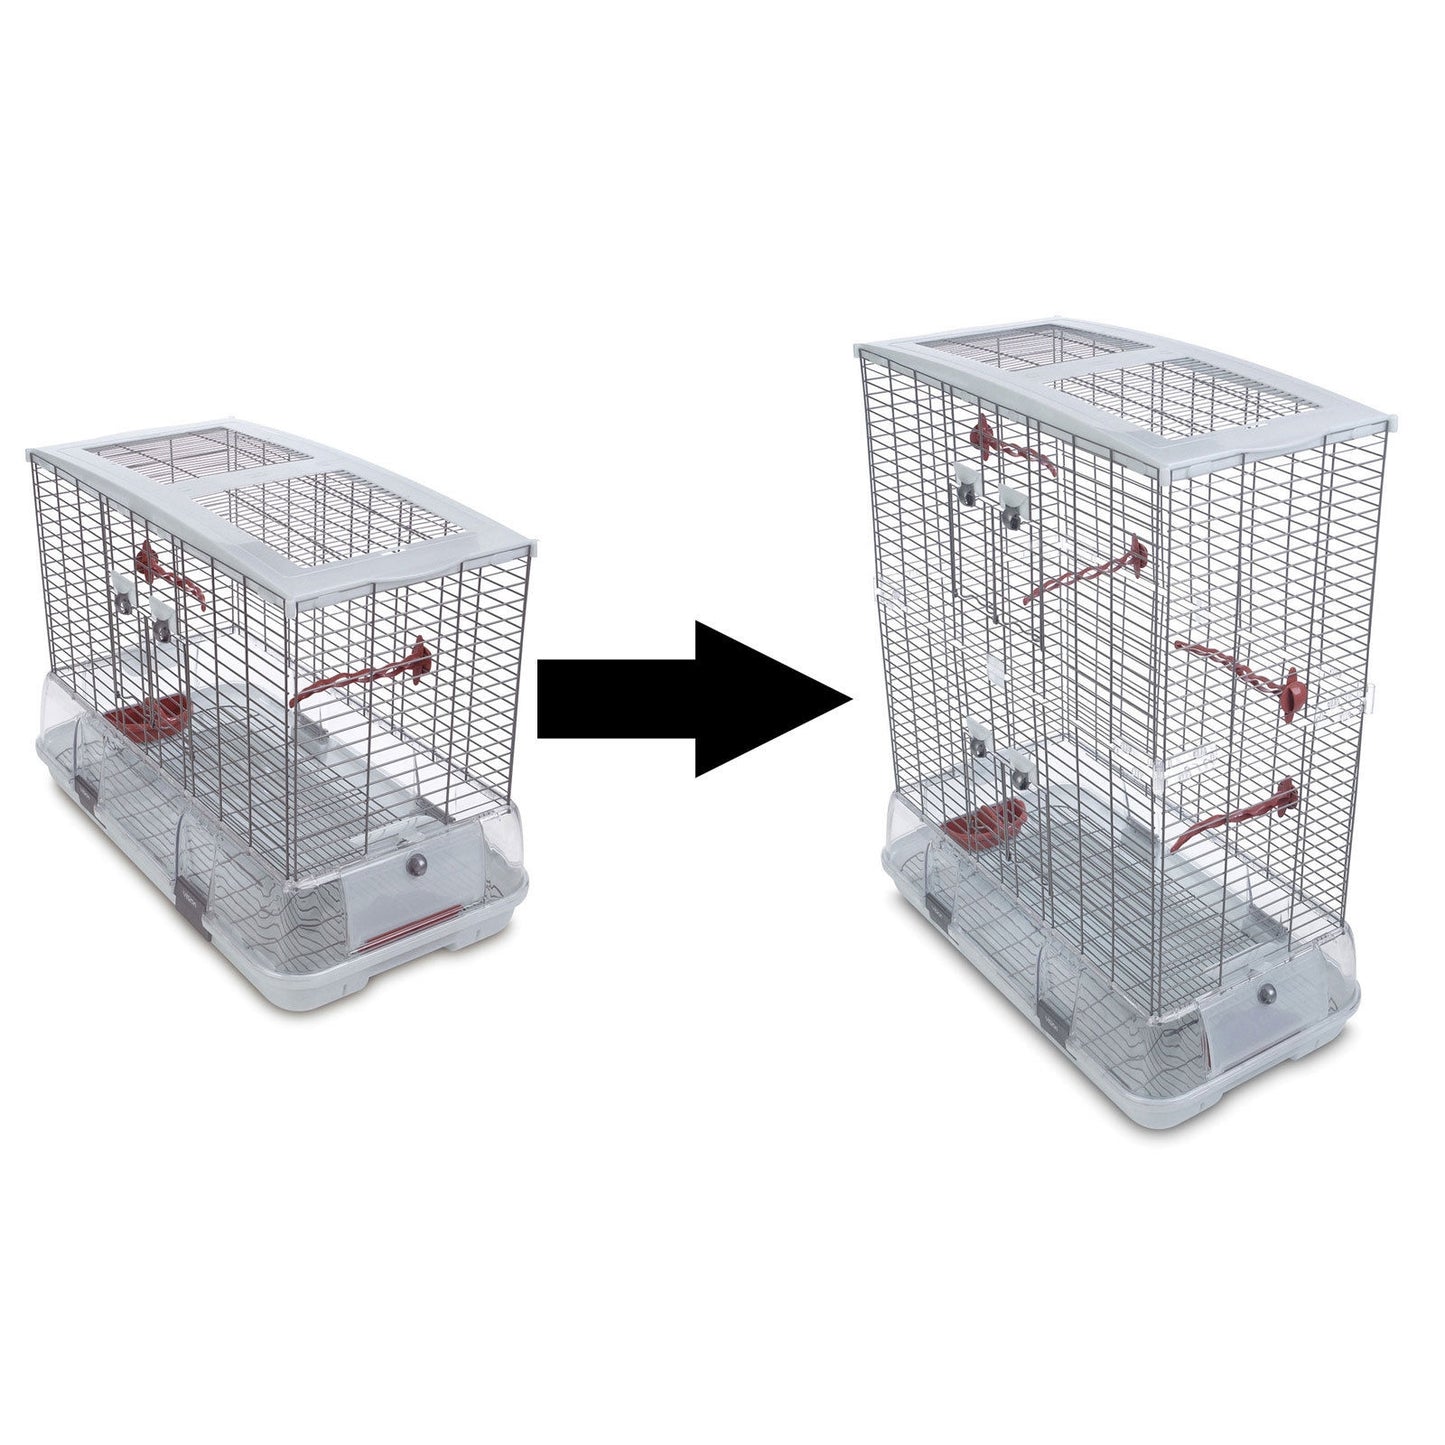 Vision Cage Extension Kits - Converts Medium Regular Cage to Medium Tall Cage